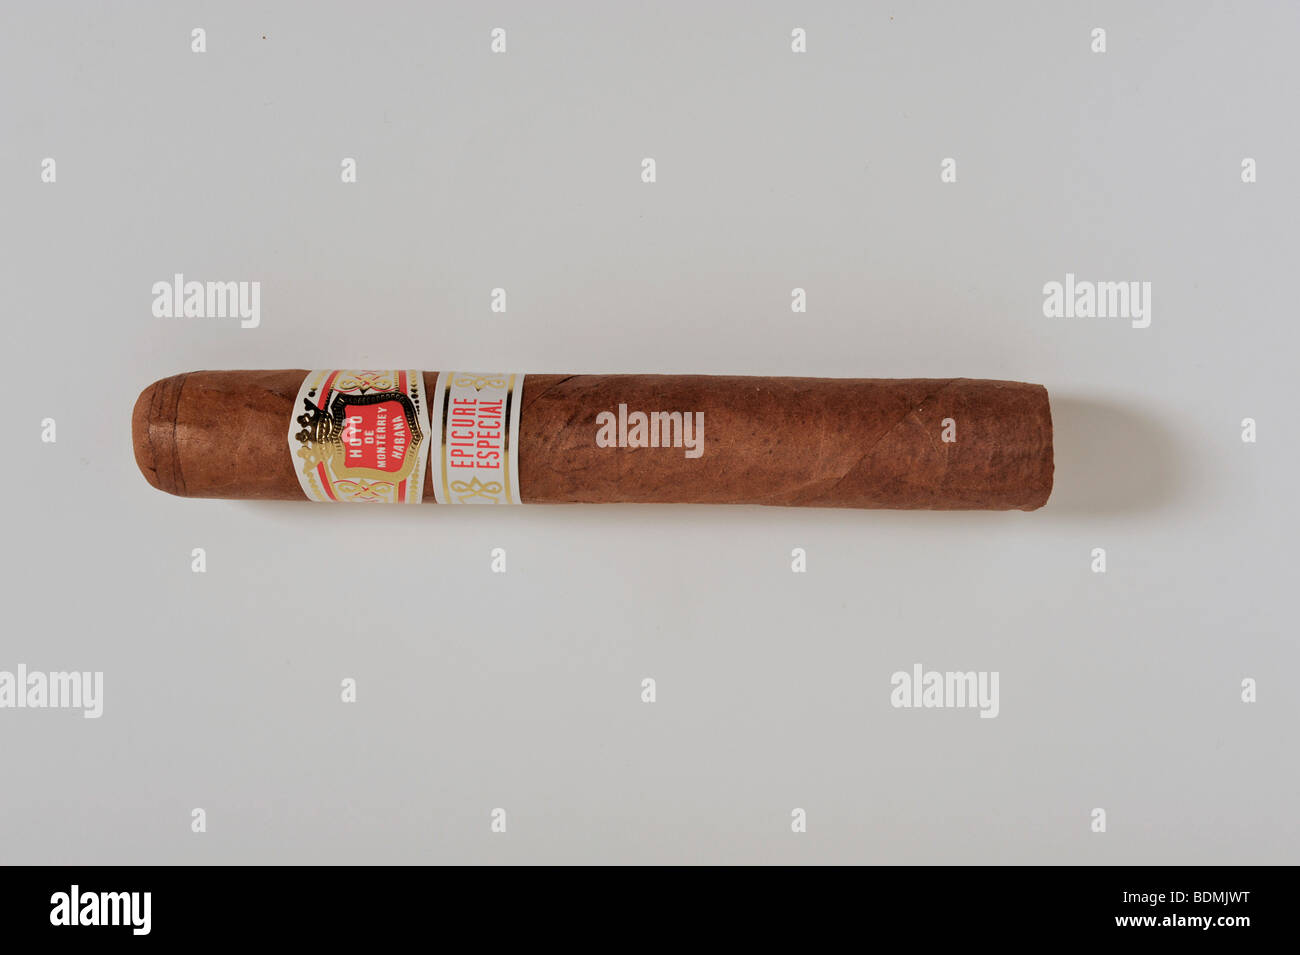 Hoyo de Monterey Epicure Especial Havana cigar. Stock Photo